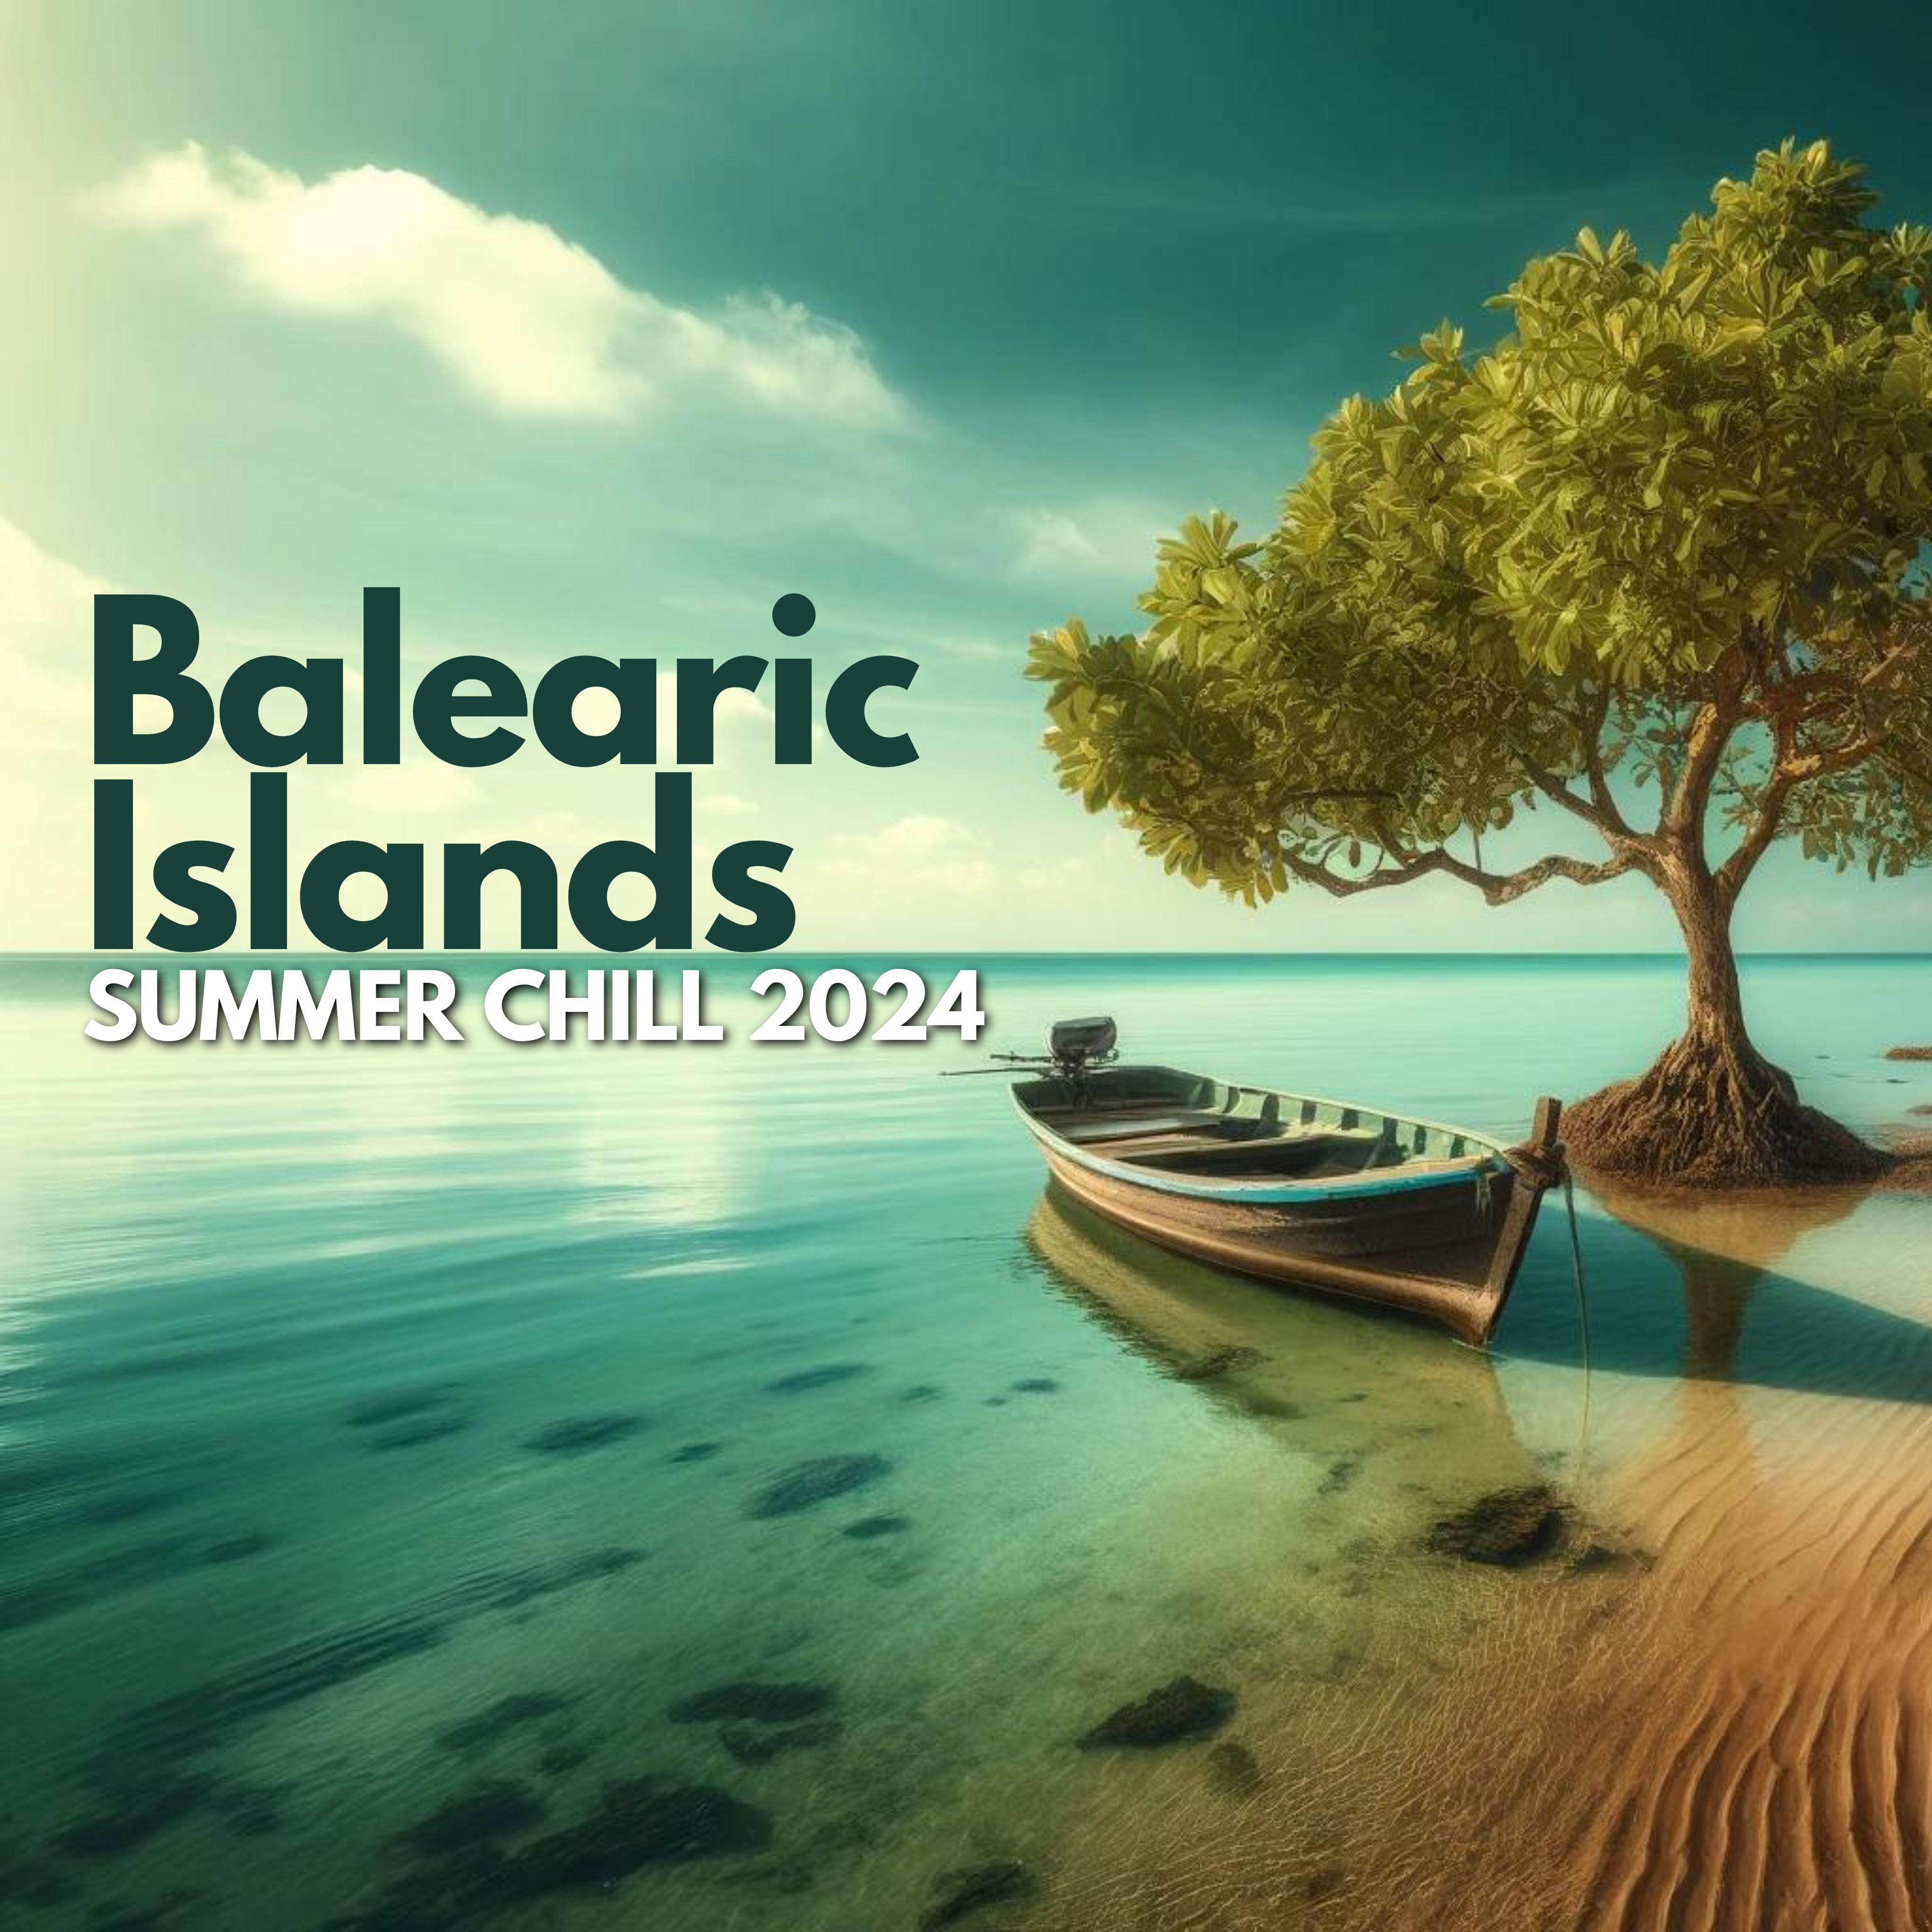 Balearic Beach Music Club - Frist Time in Majorca